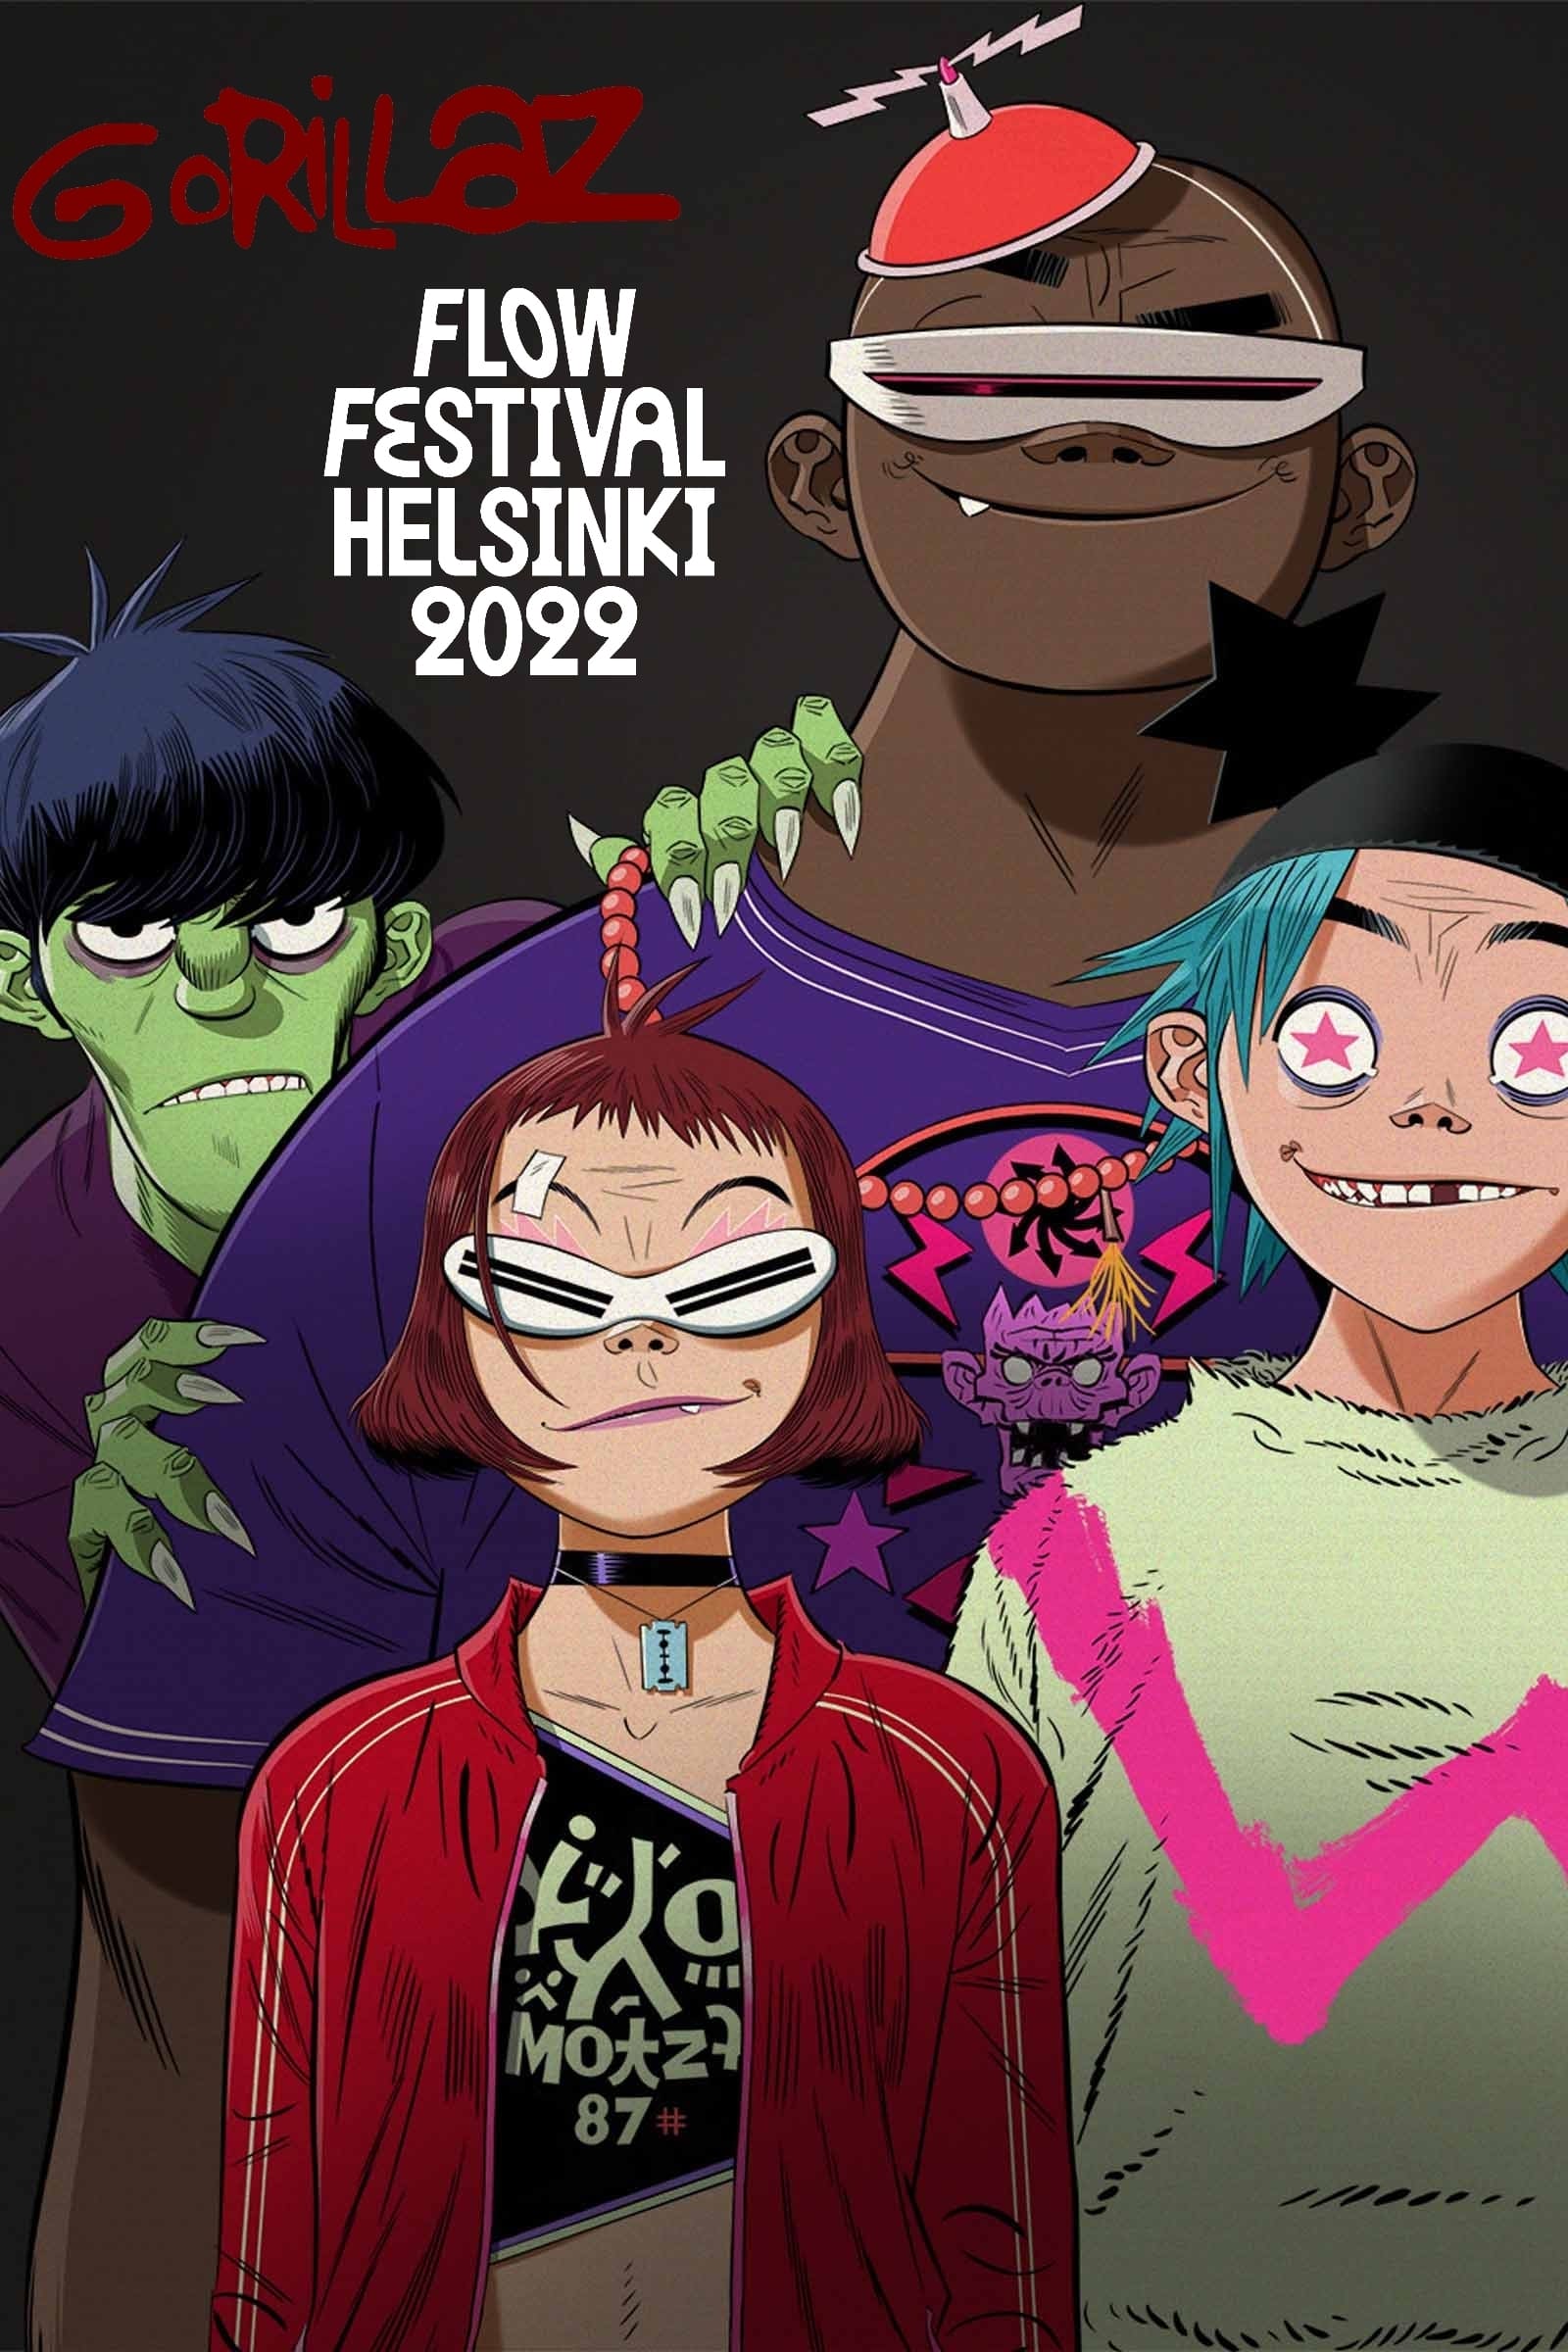 Gorillaz | Flow Festival 2022